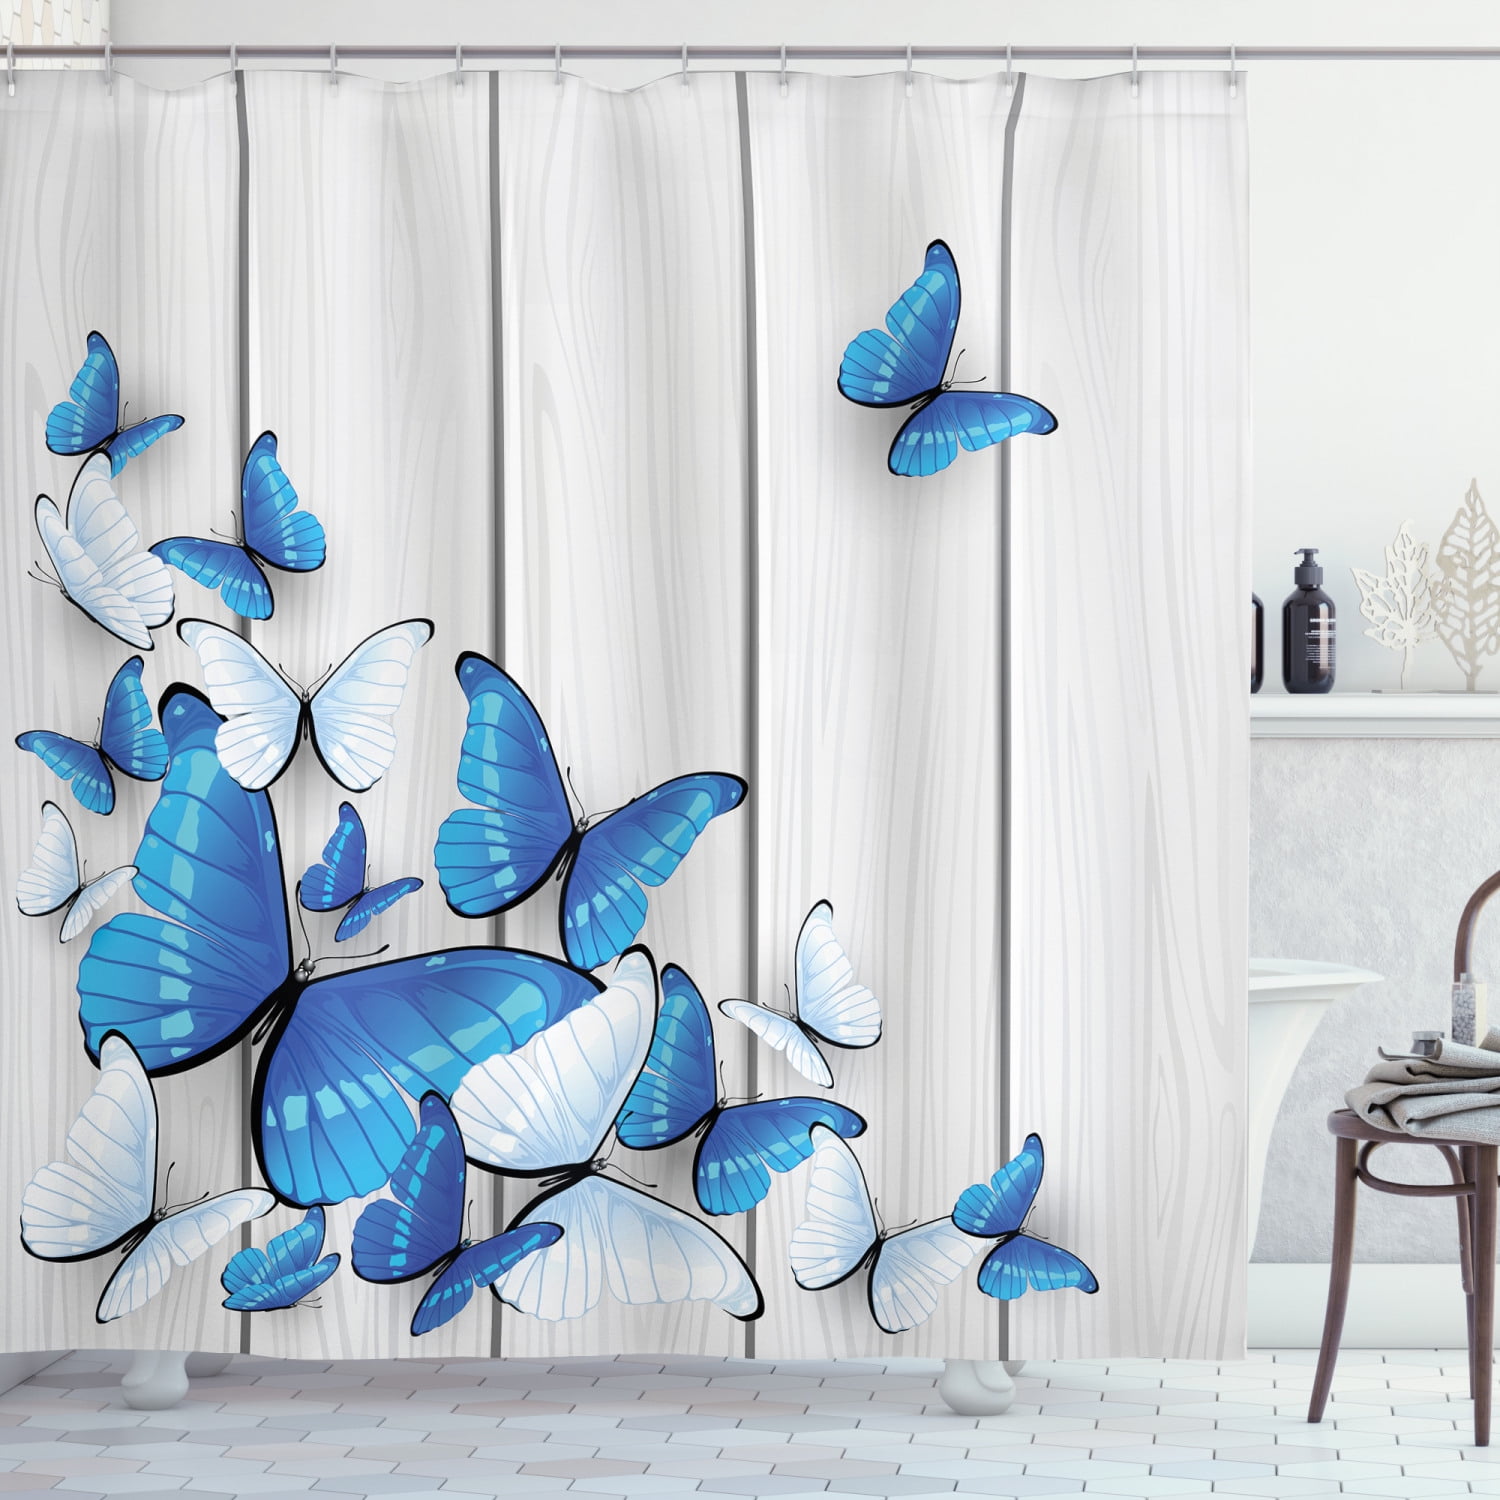 Details about  / Shower Curtain Art Bathroom Decor Flying Butterflies Bath Curtains 12 Hooks